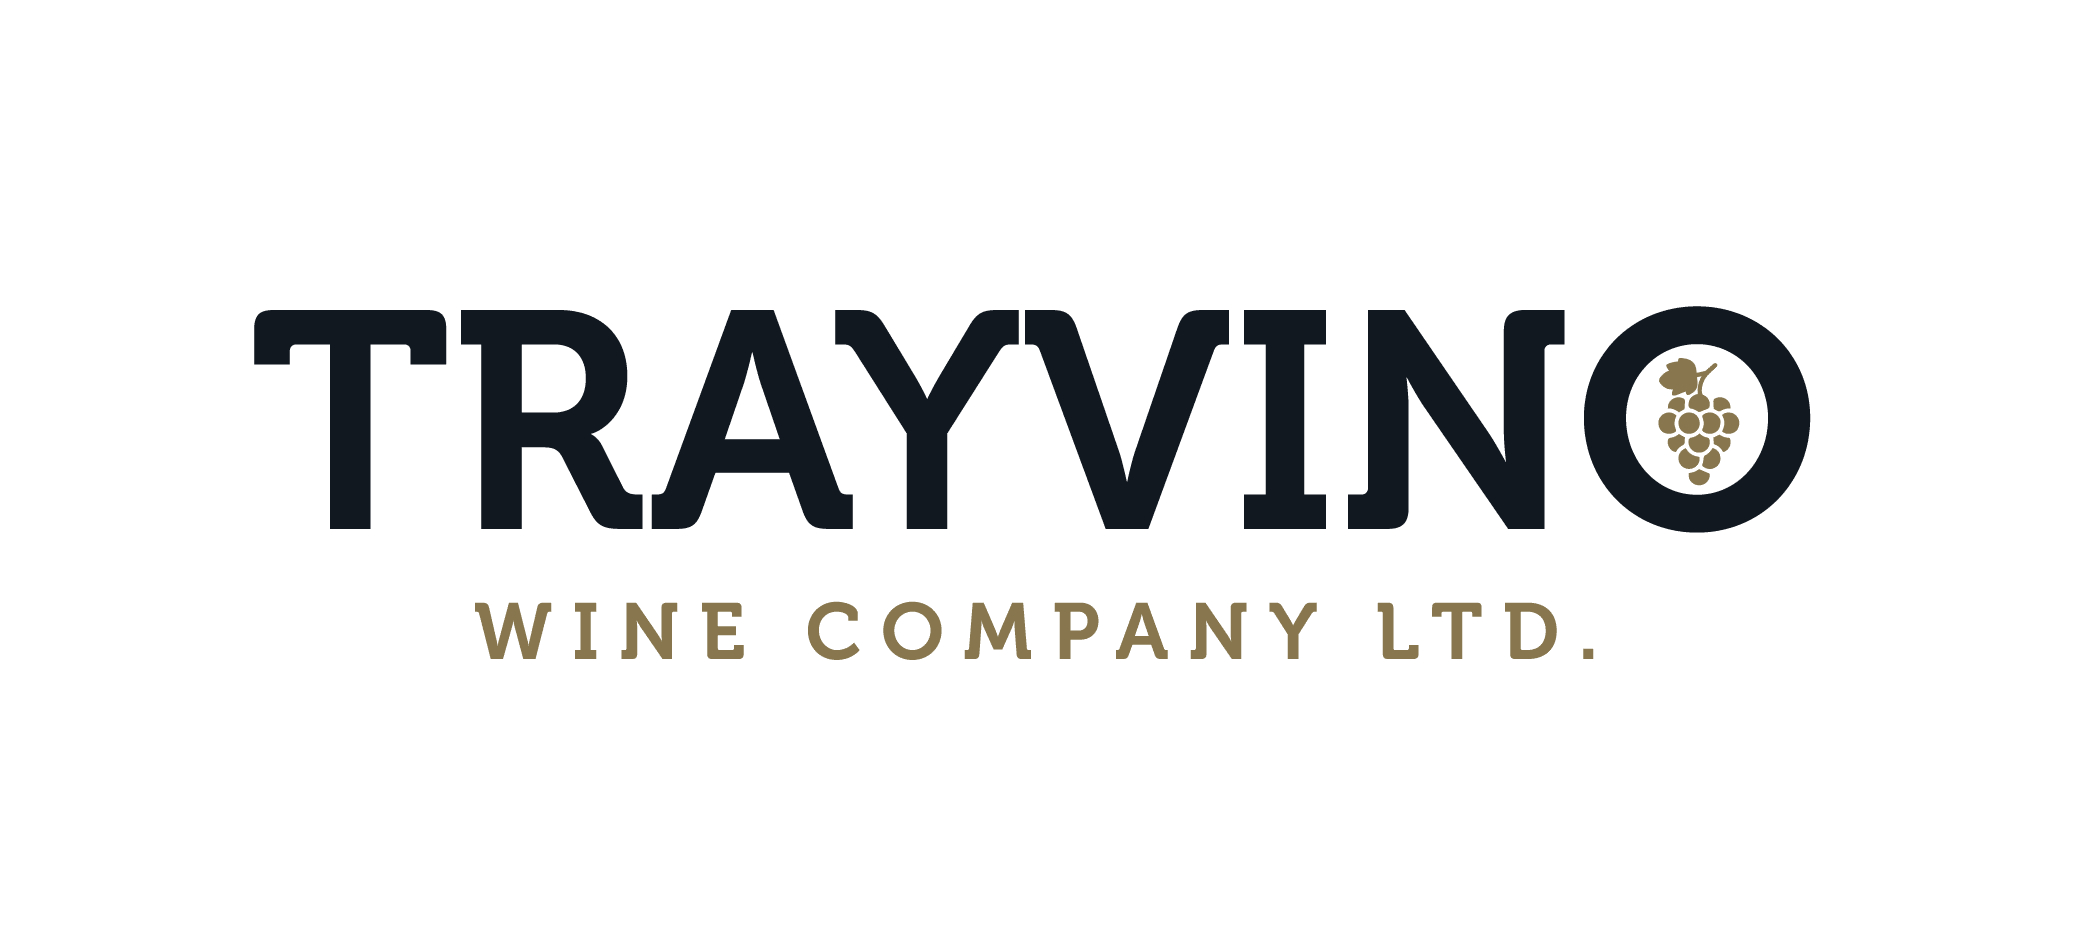 Trayvino Wines, Luce Initiative Sponsor